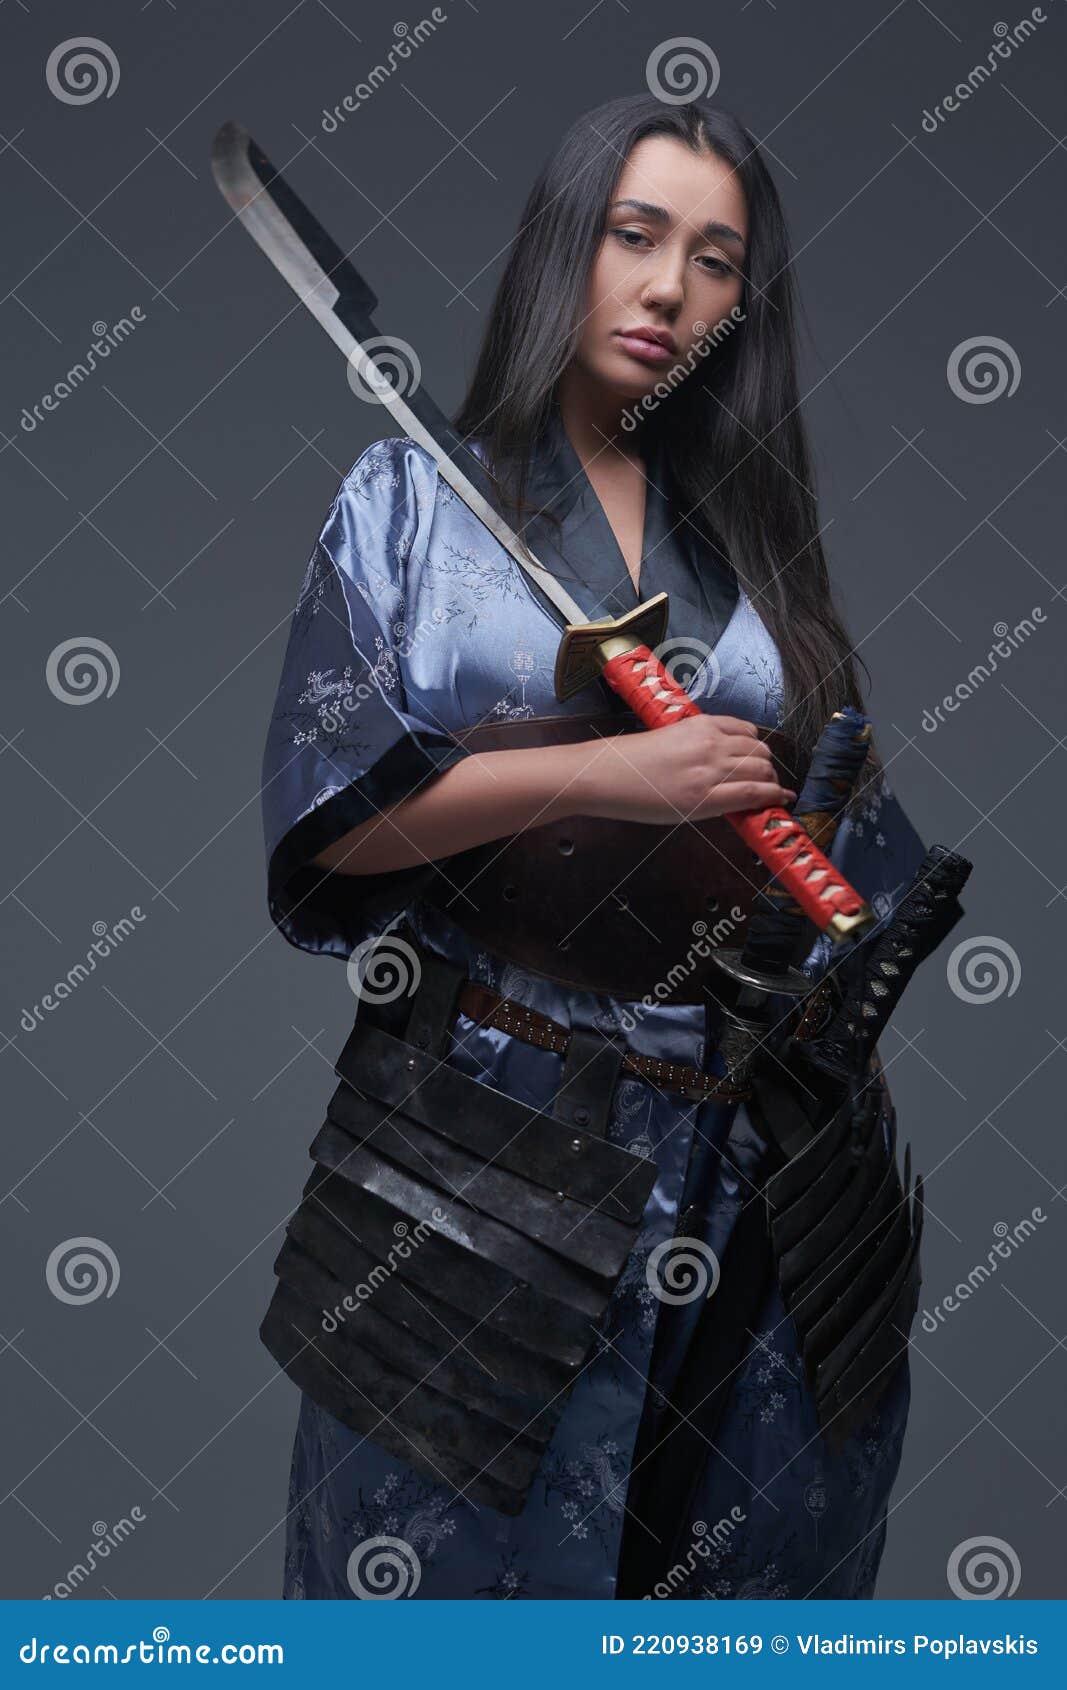 Female Samurai Holding Katana On Her Shoulder Stock Image Image Of People Indoor 220938169